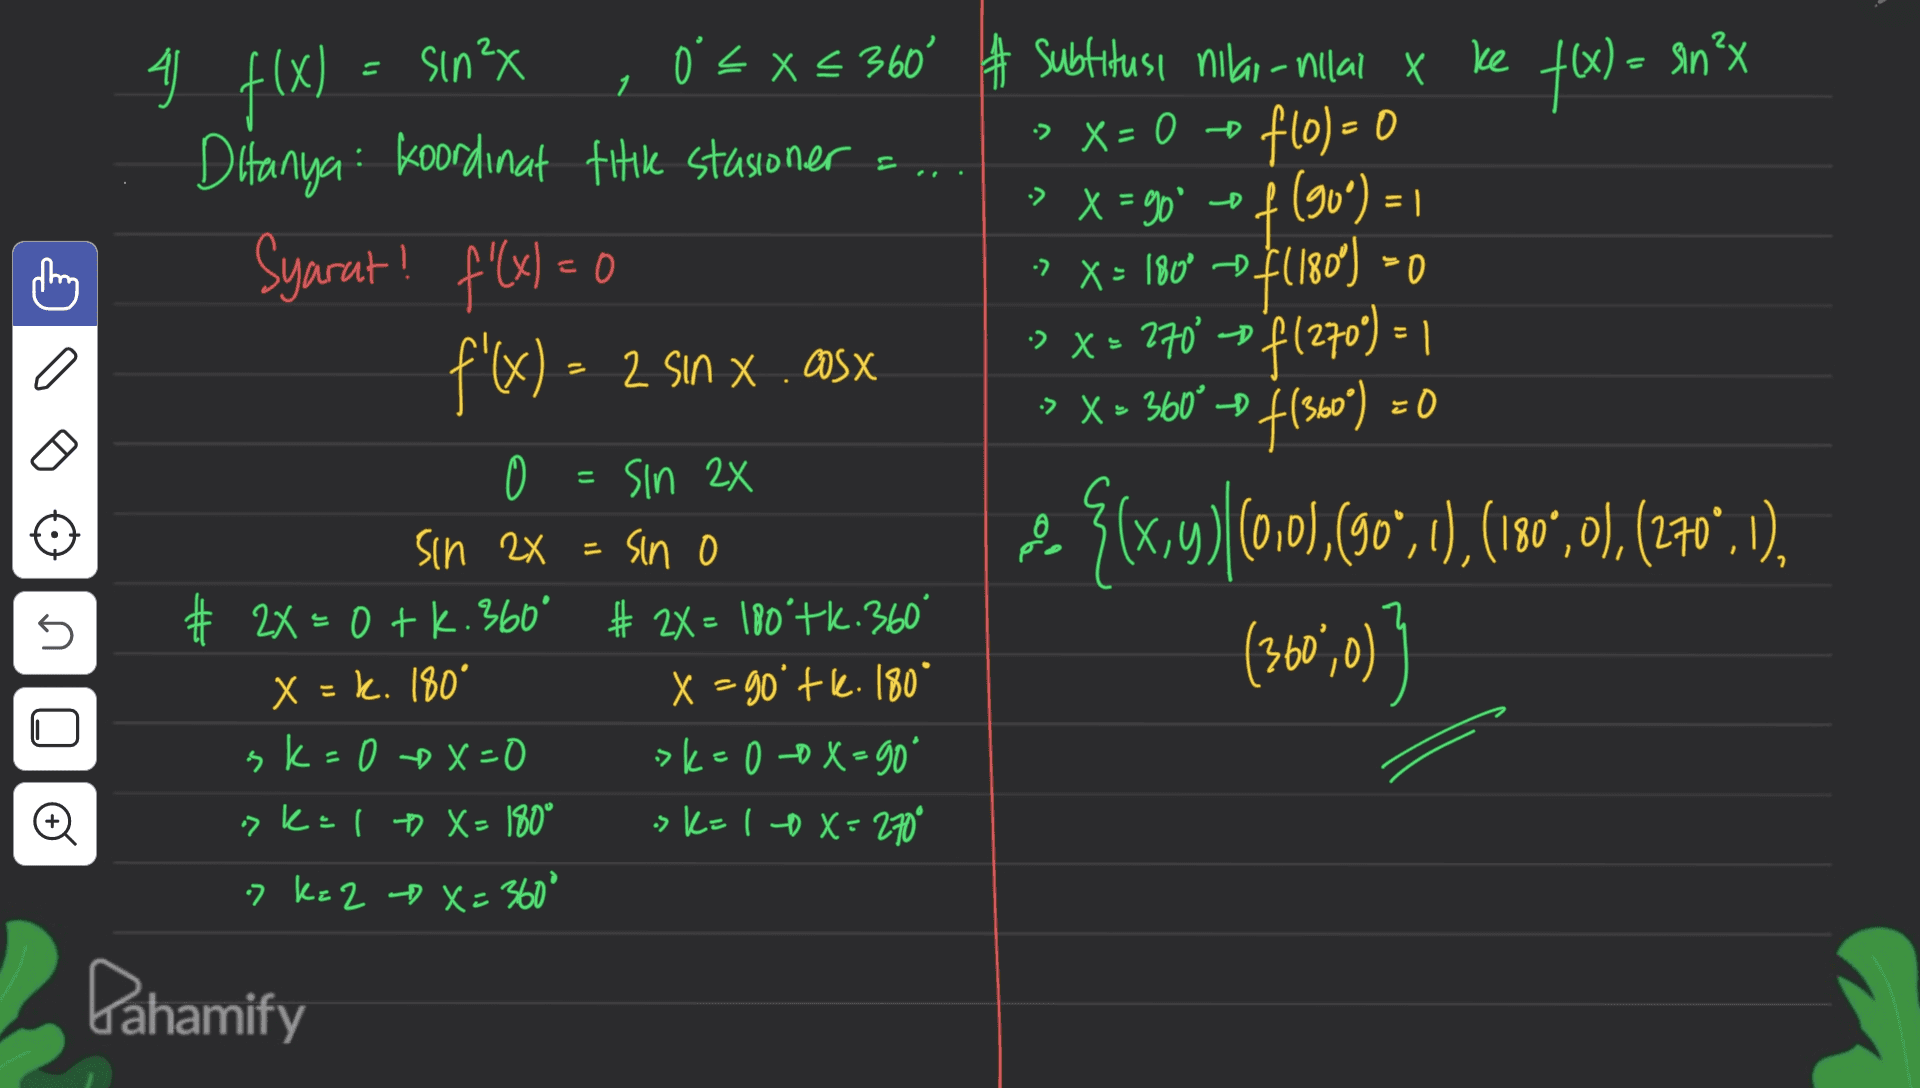 A 4 f(x) = sin X, US = (st on x # ,5.0 1 a o= Xc flol=0 1 = =0 - ²x 0 < x < 360 # Subtitusi nilai-illal x Ditanya koordinat titik stasioner =... :> X = go of f (90°) = 1 Syarat! f'(X) = 0 ! (x > X = 180° -$180) 0 f'() - 2 sinx.asx f(360° ) {x,y)(0,0),600,1),(180,0), (270".1). (360%,0) () 1= (otzita etz axc. :> X = 360° 0 = 0 = XZ uis 0 XZ U sin 2x = sin o o # 2X=0 tk.360° # 24 = 180°tk. 360° X = k. 180° X = 90° tk. 180° sk=0 X=0 >k=00x=90° >kal » X= 180° sk=10X=270° 7 k= 2 X=360° o Pahamify 